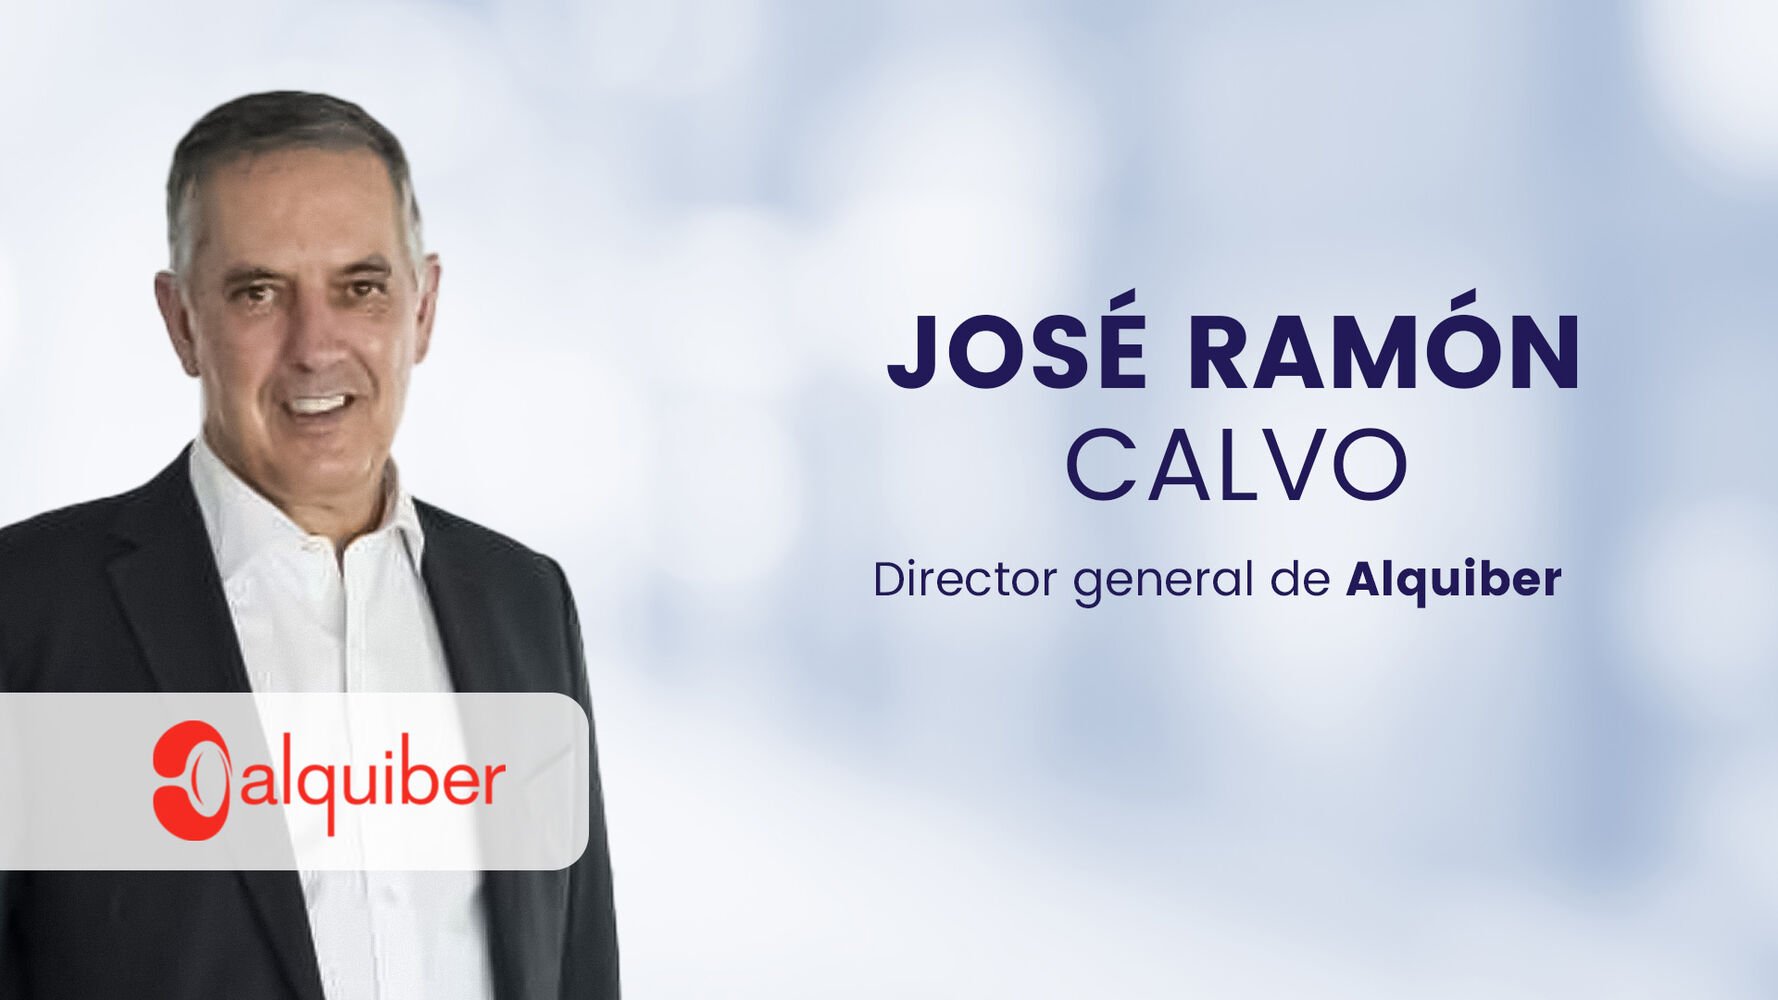 José Ramón Calvo